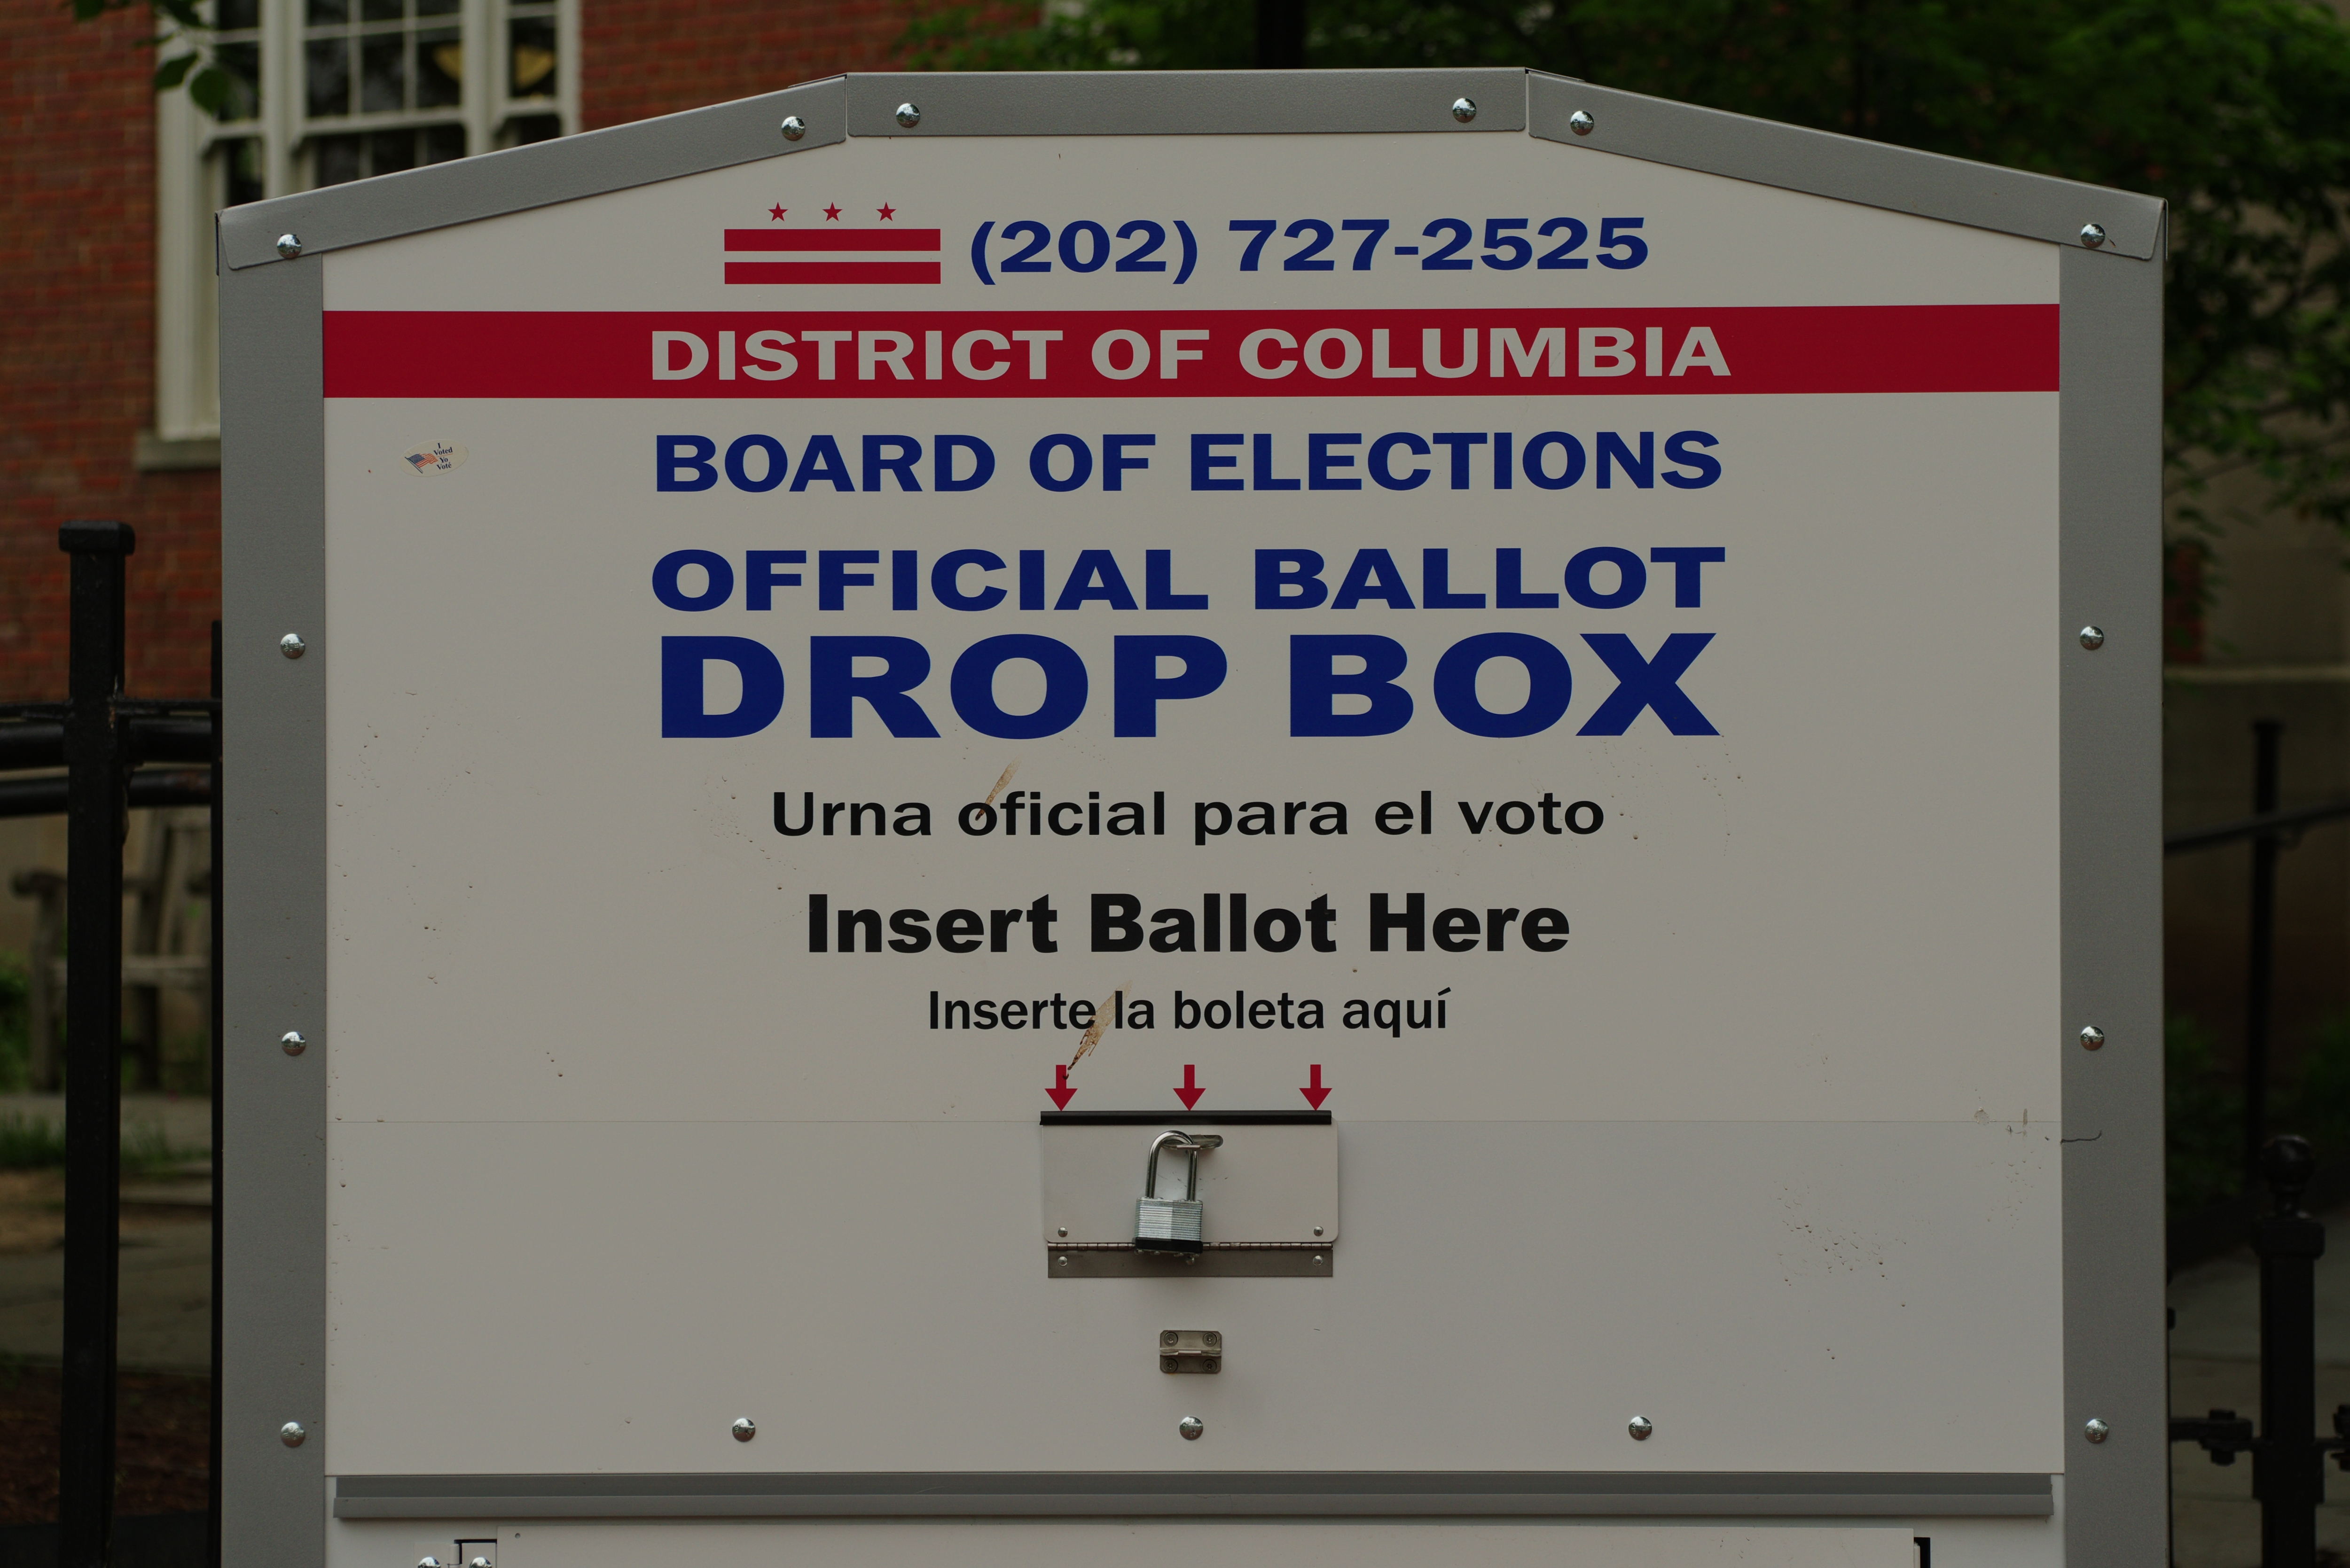 D.C. Official Ballot Drop box